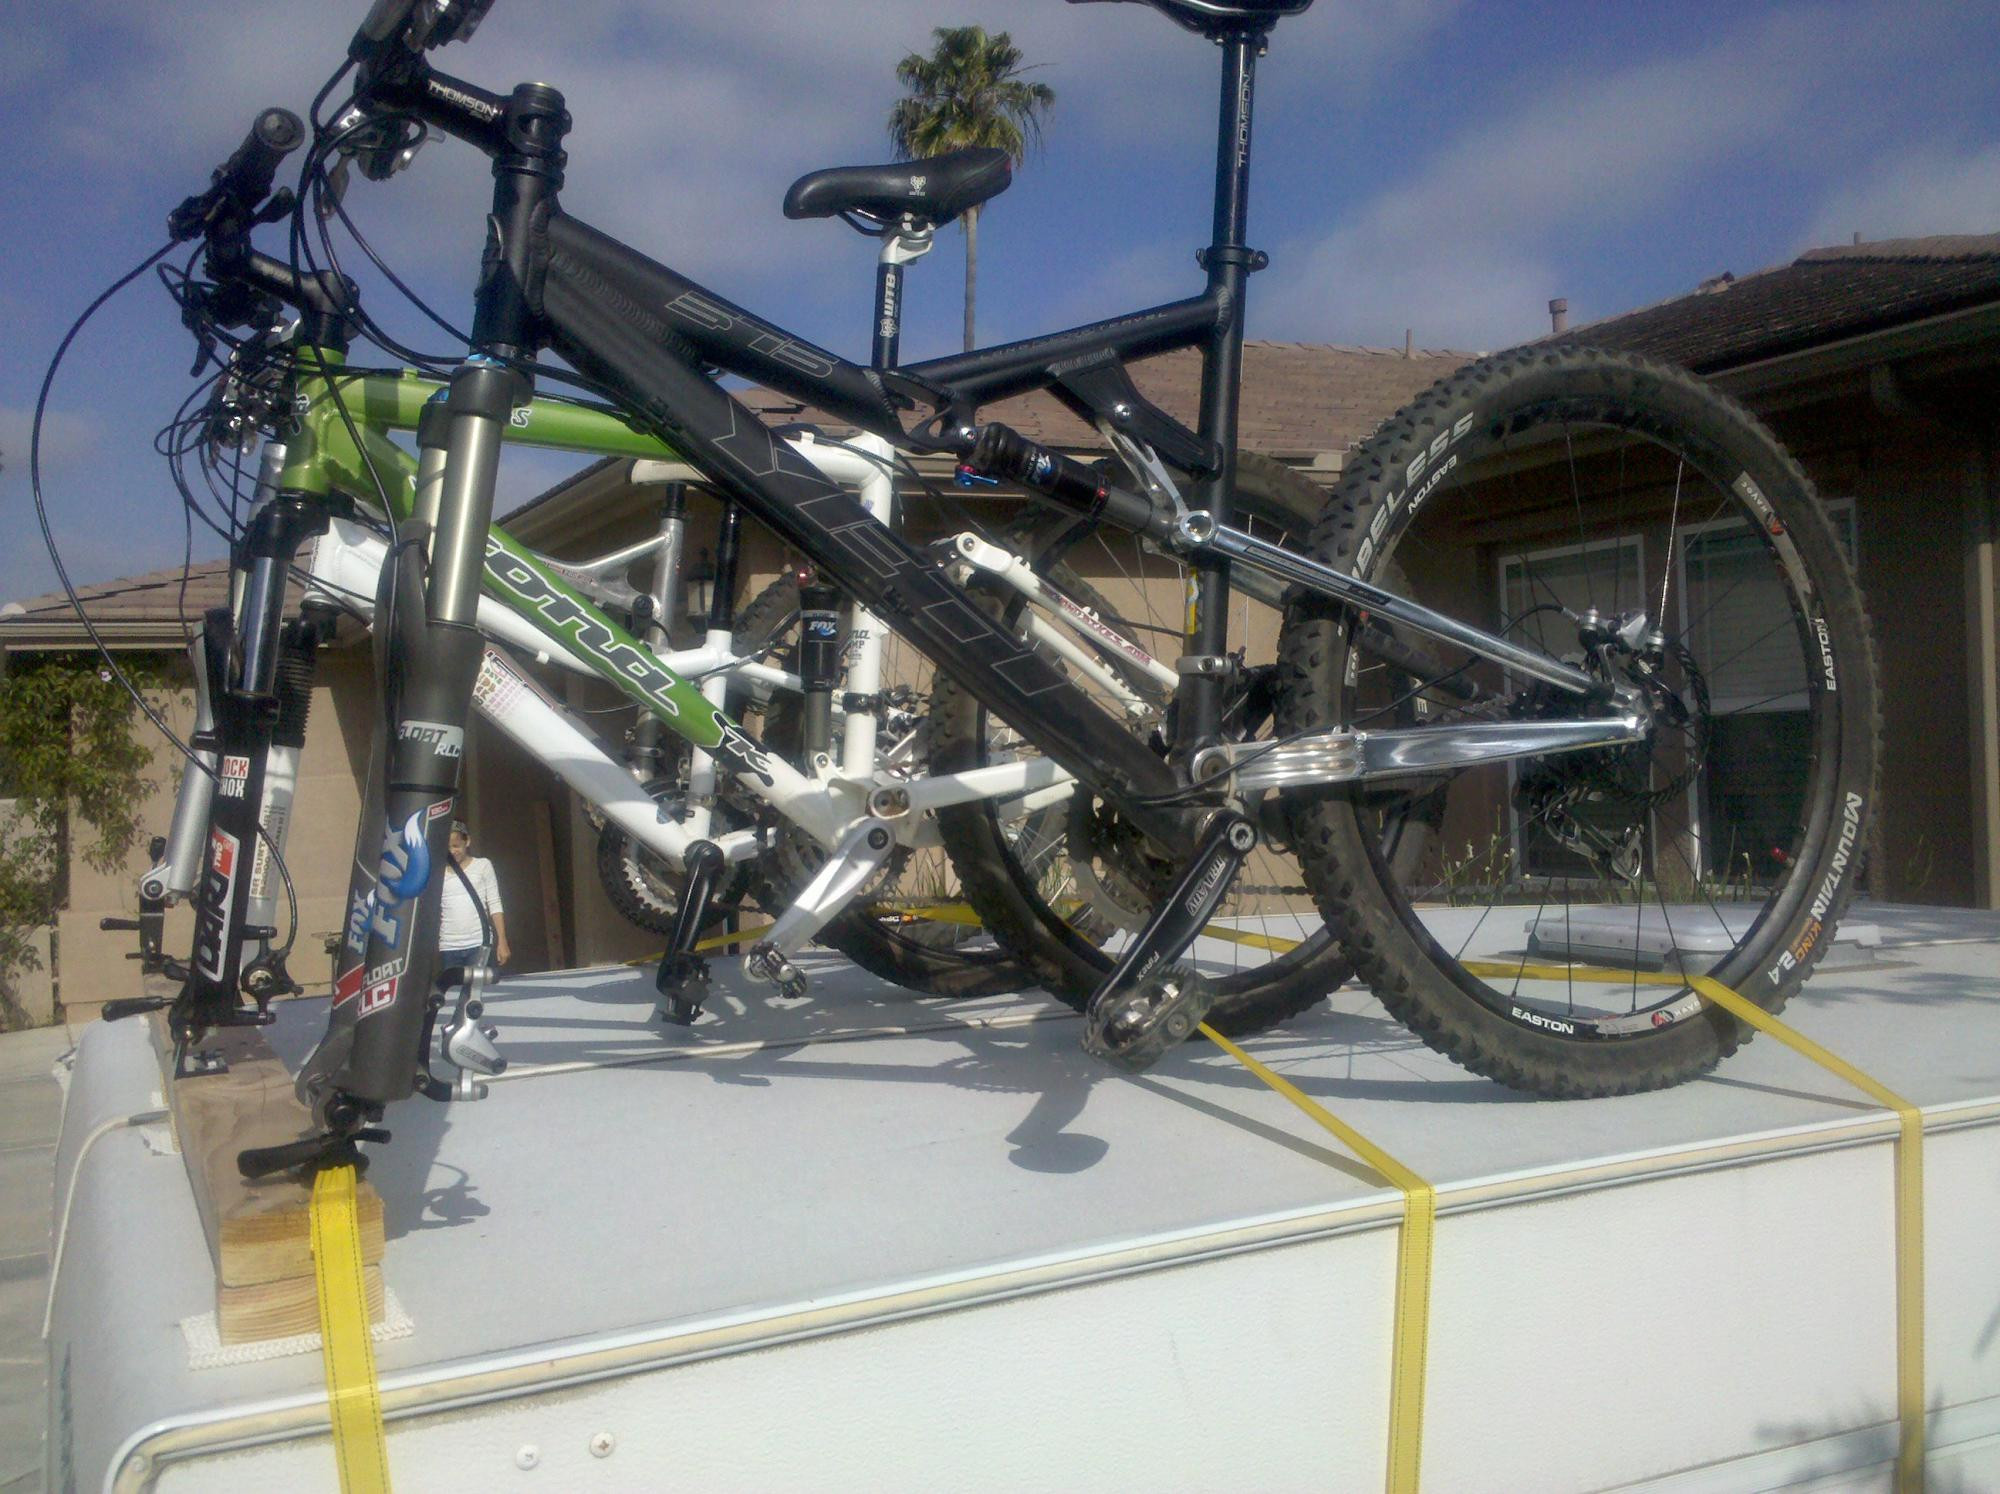 Pop Up Camper Bike Rack DIY
 Diy Pop Up Camper Bike Rack Wwwgalleryhip The Homemade